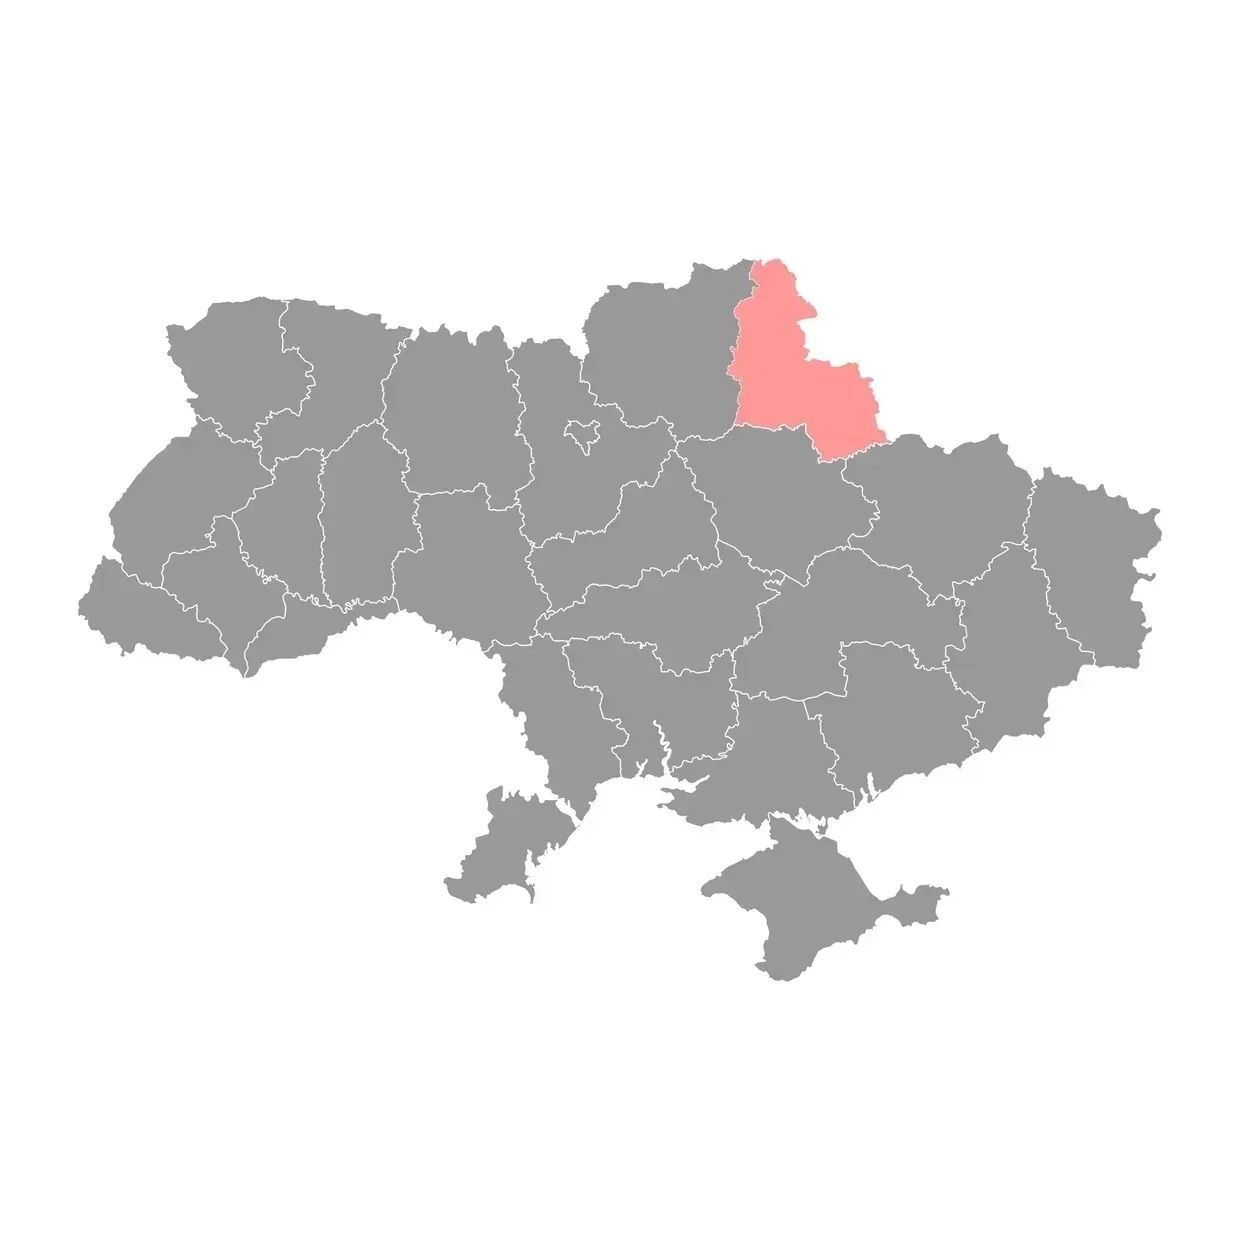 Russia shells 6 communities in Sumy Oblast